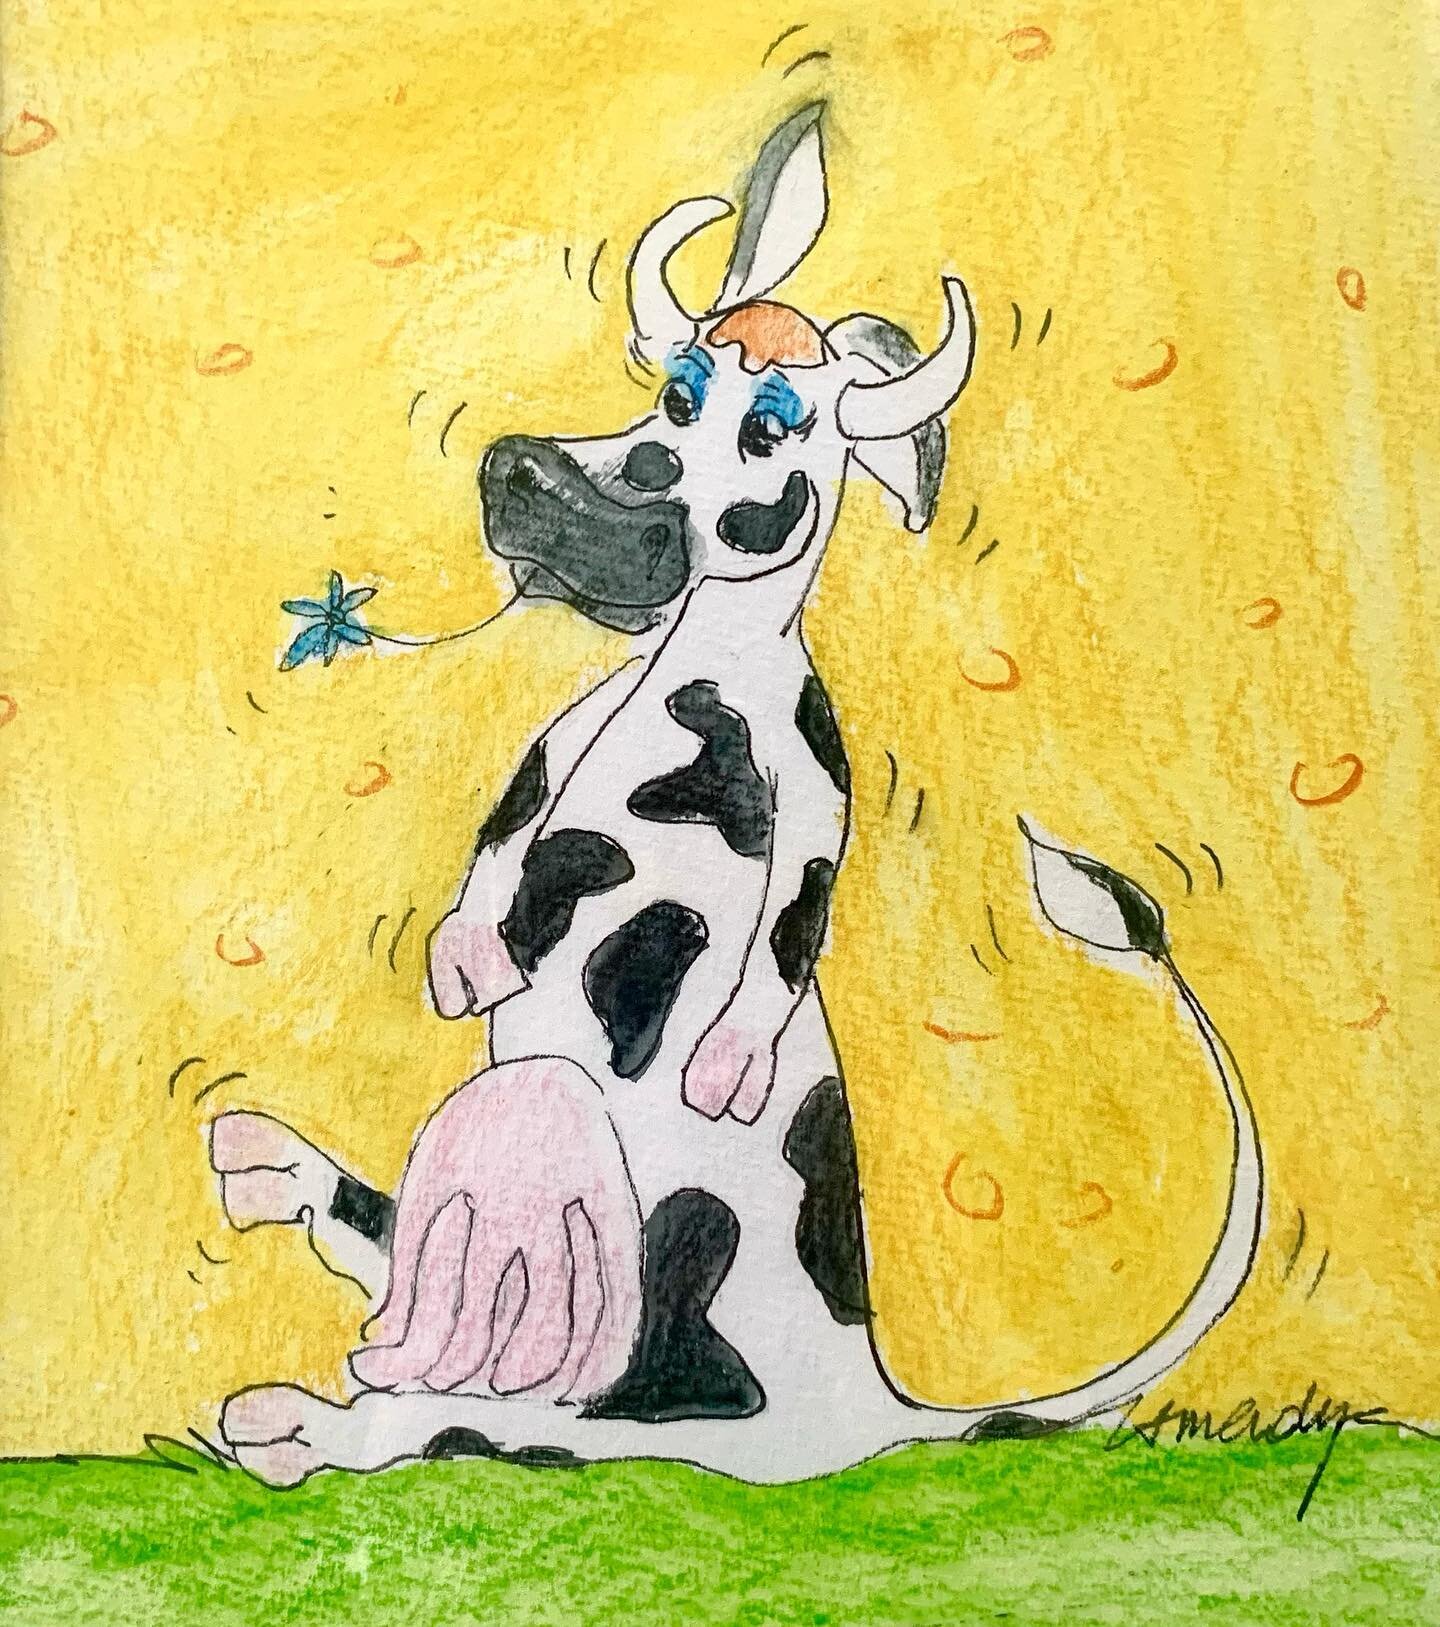 &hellip;dreamy cow! 
#dream #cow #notsure #indifferent #illustration #cartoon